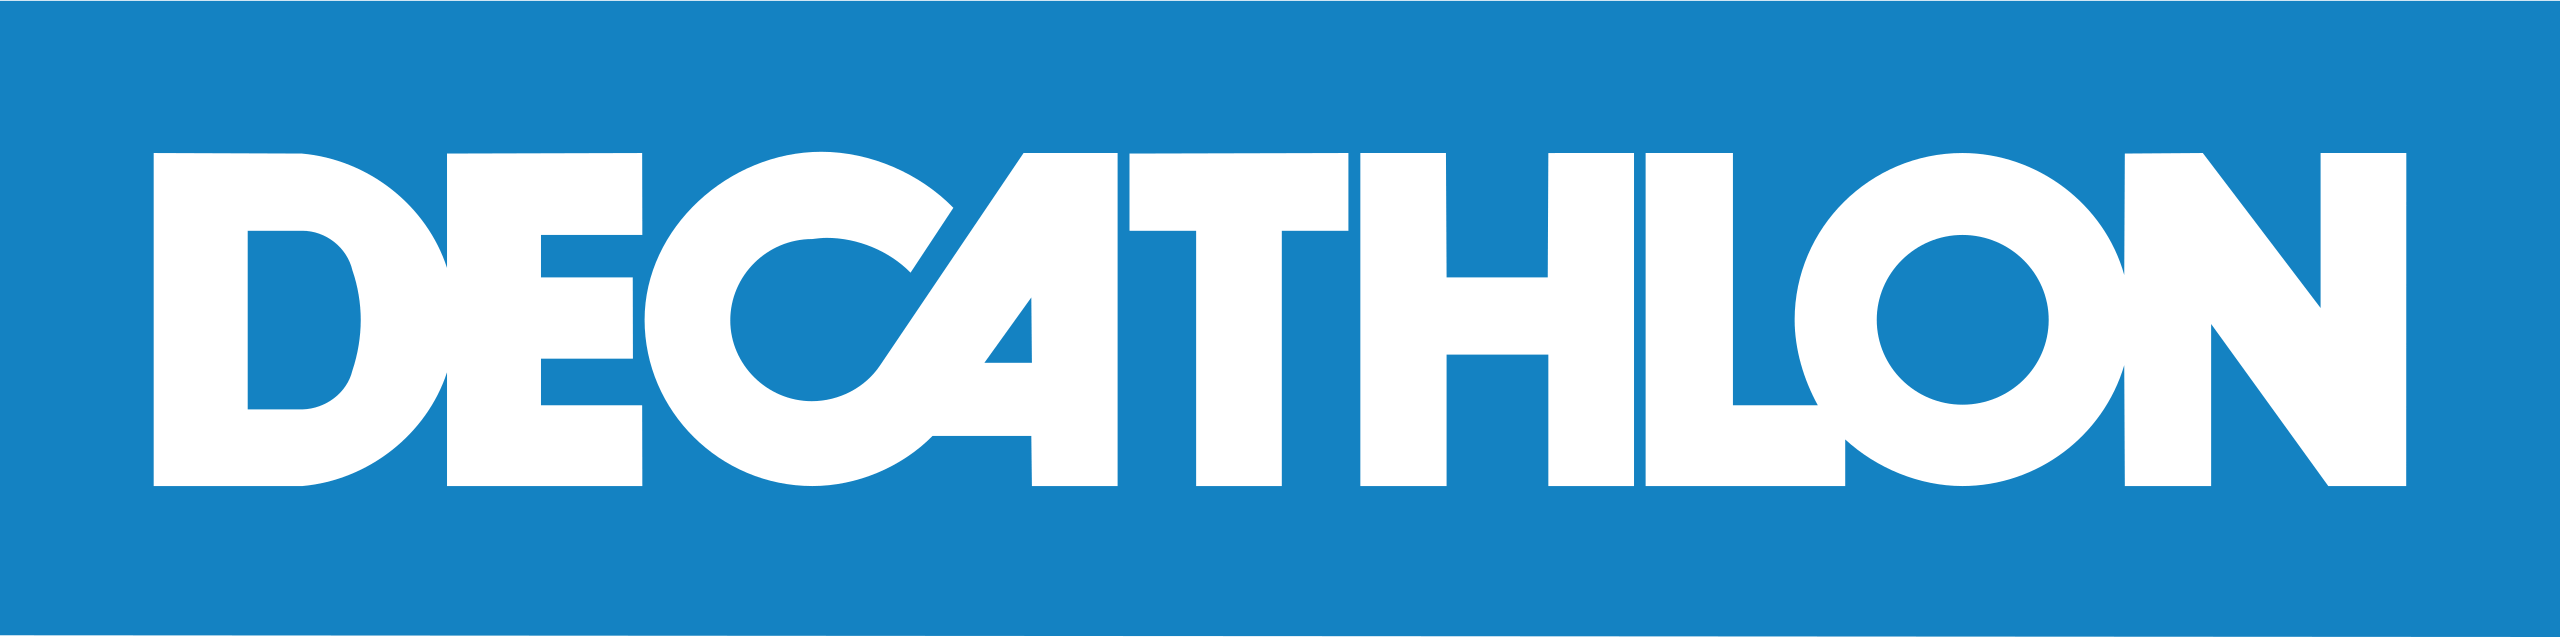 decathlon-logo-image